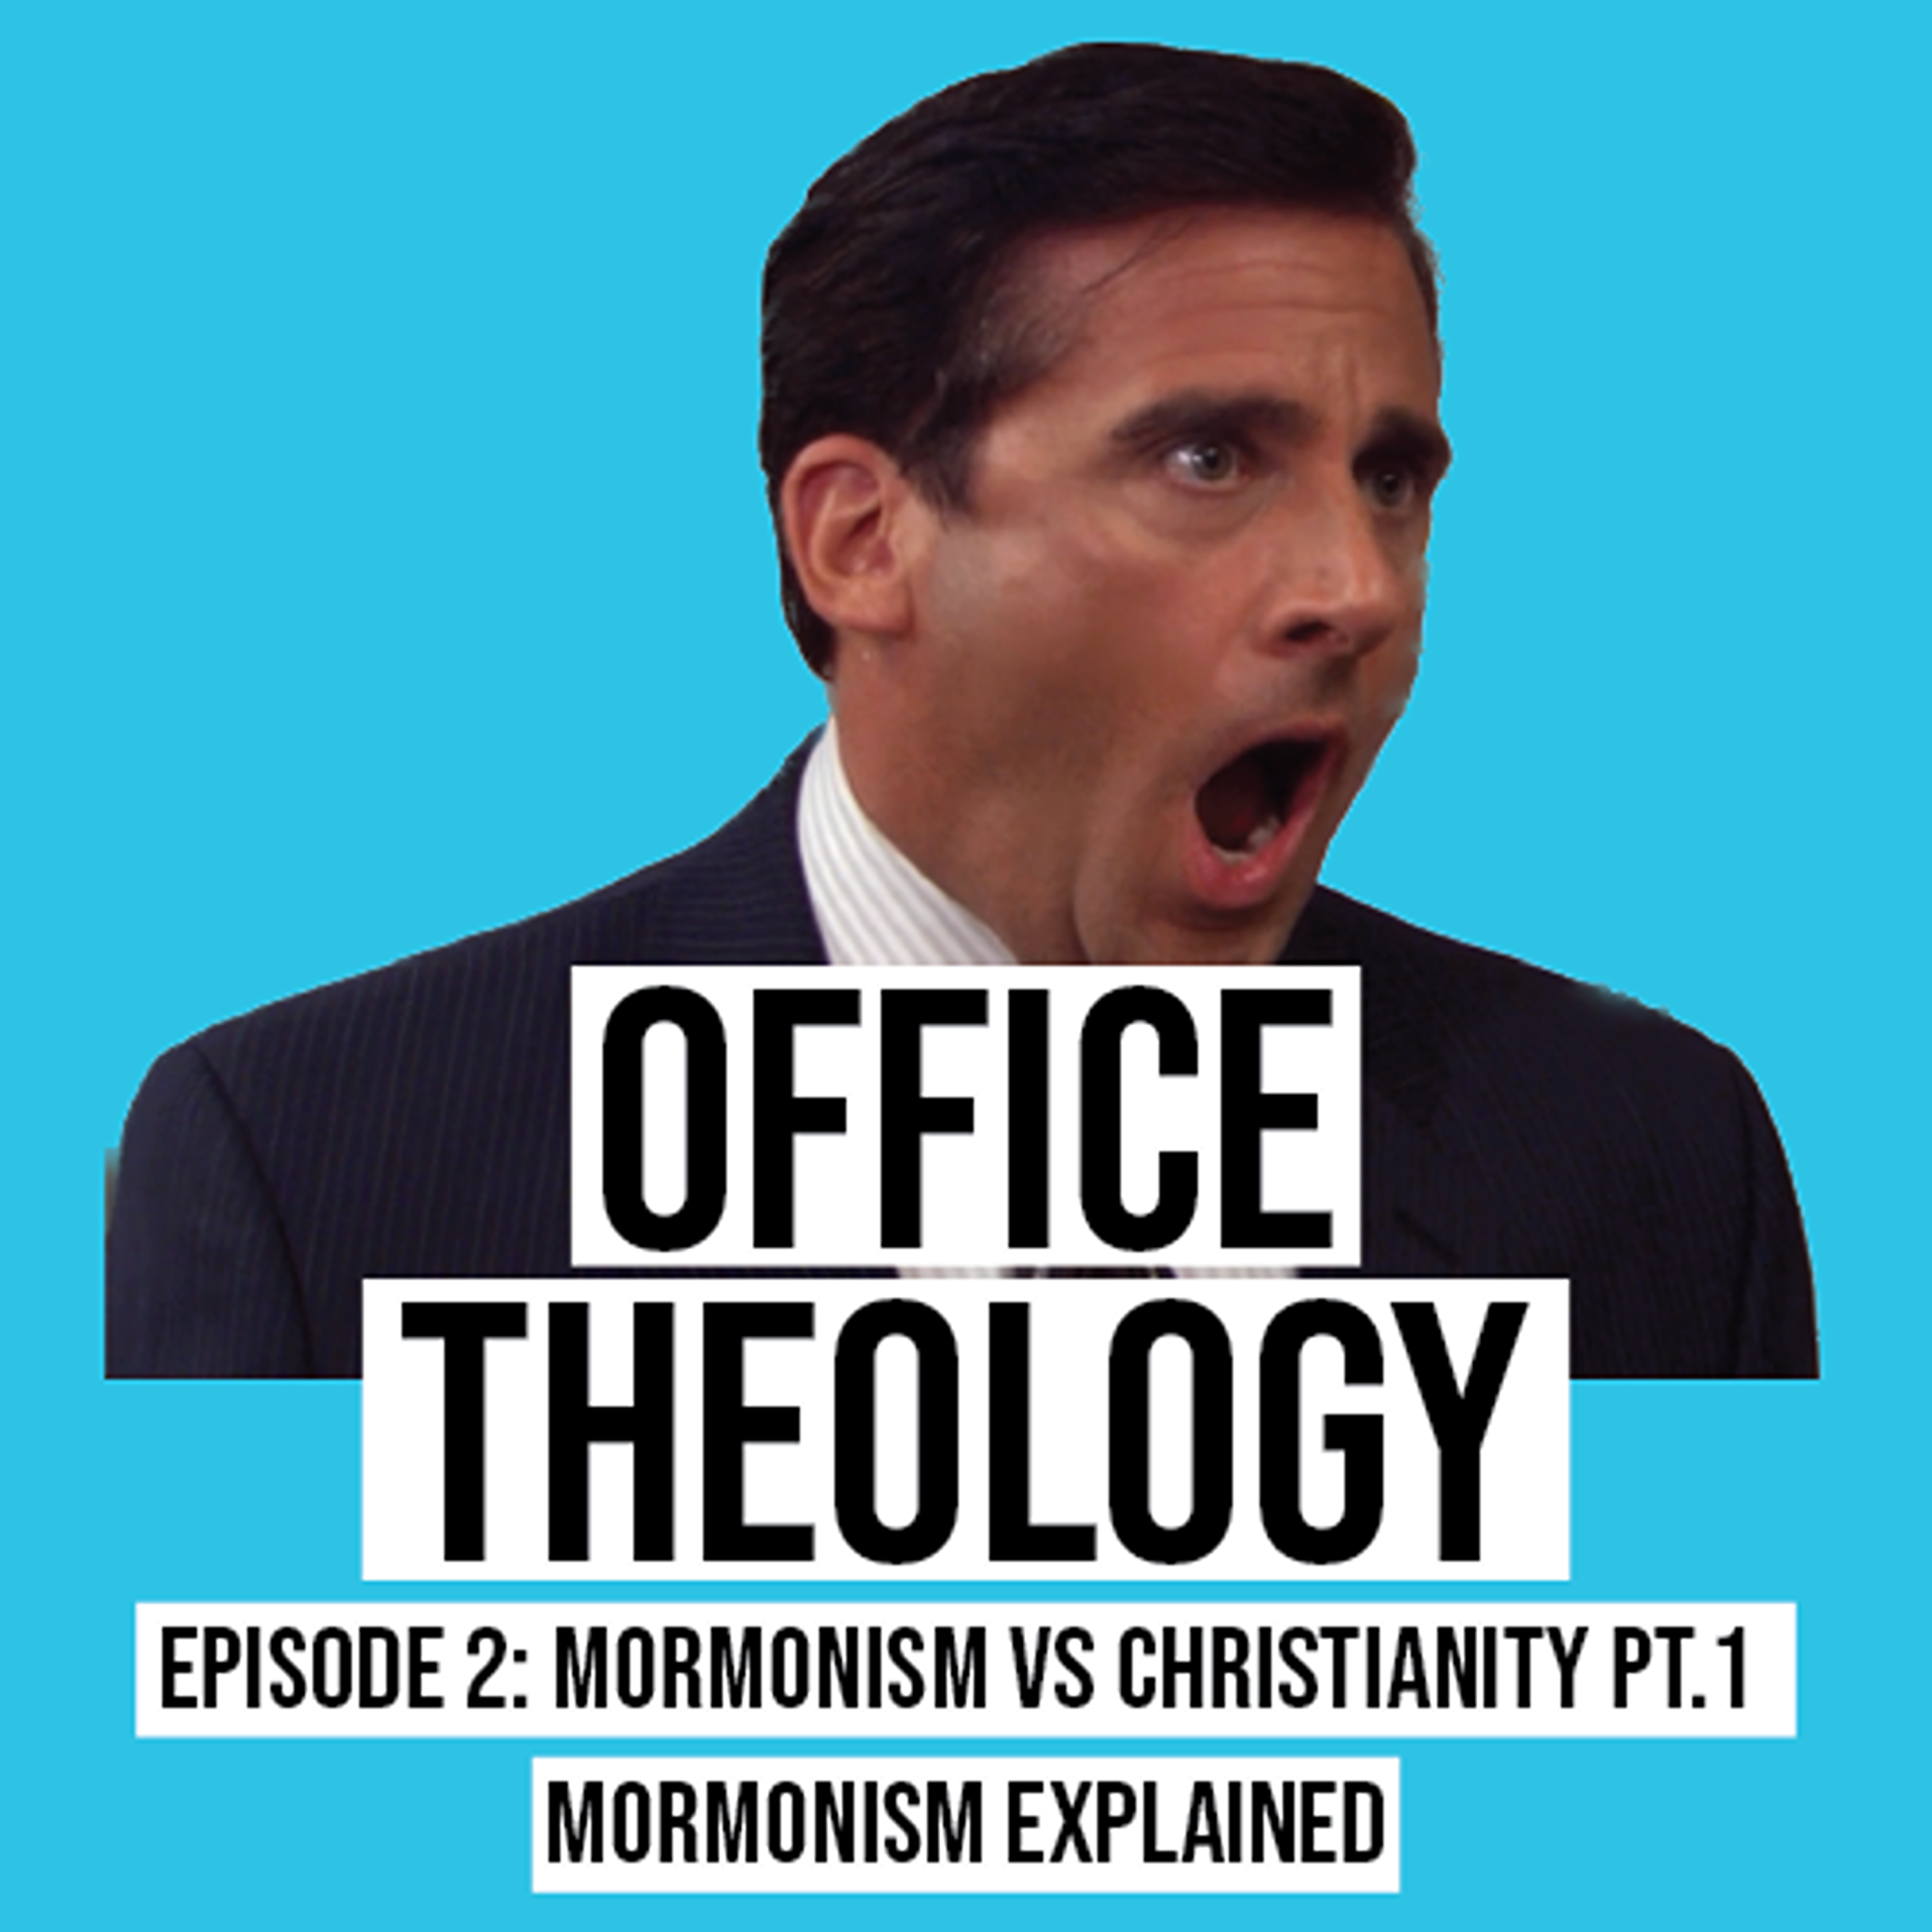 Episode 2: Pt 1 of  Mormonism vs Christianity (Mormonism explained)